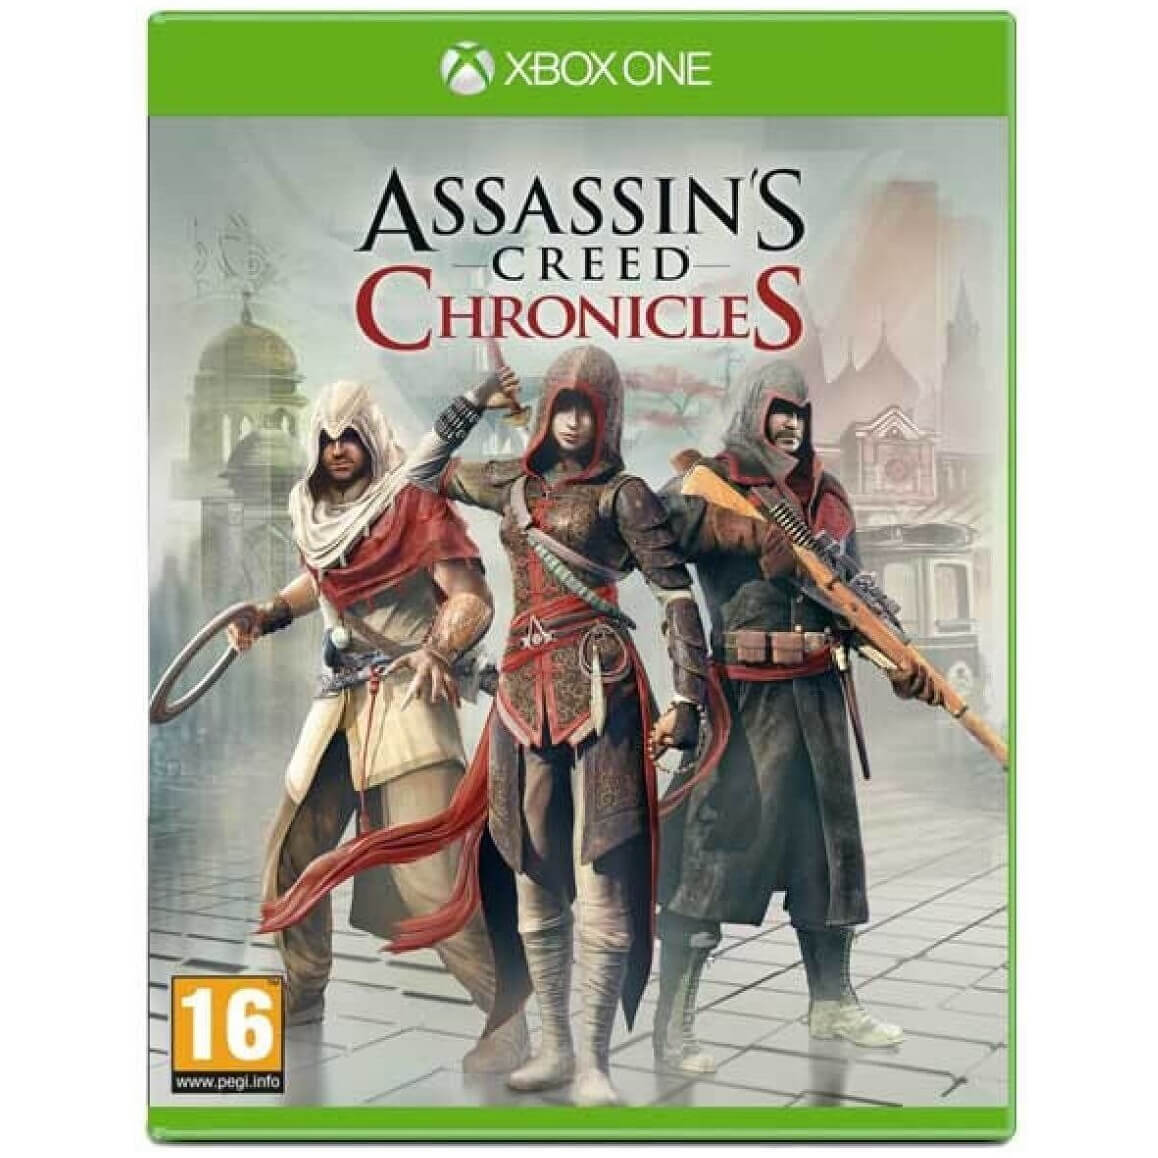  Joc Xbox One Assassins Creed Chronicles 